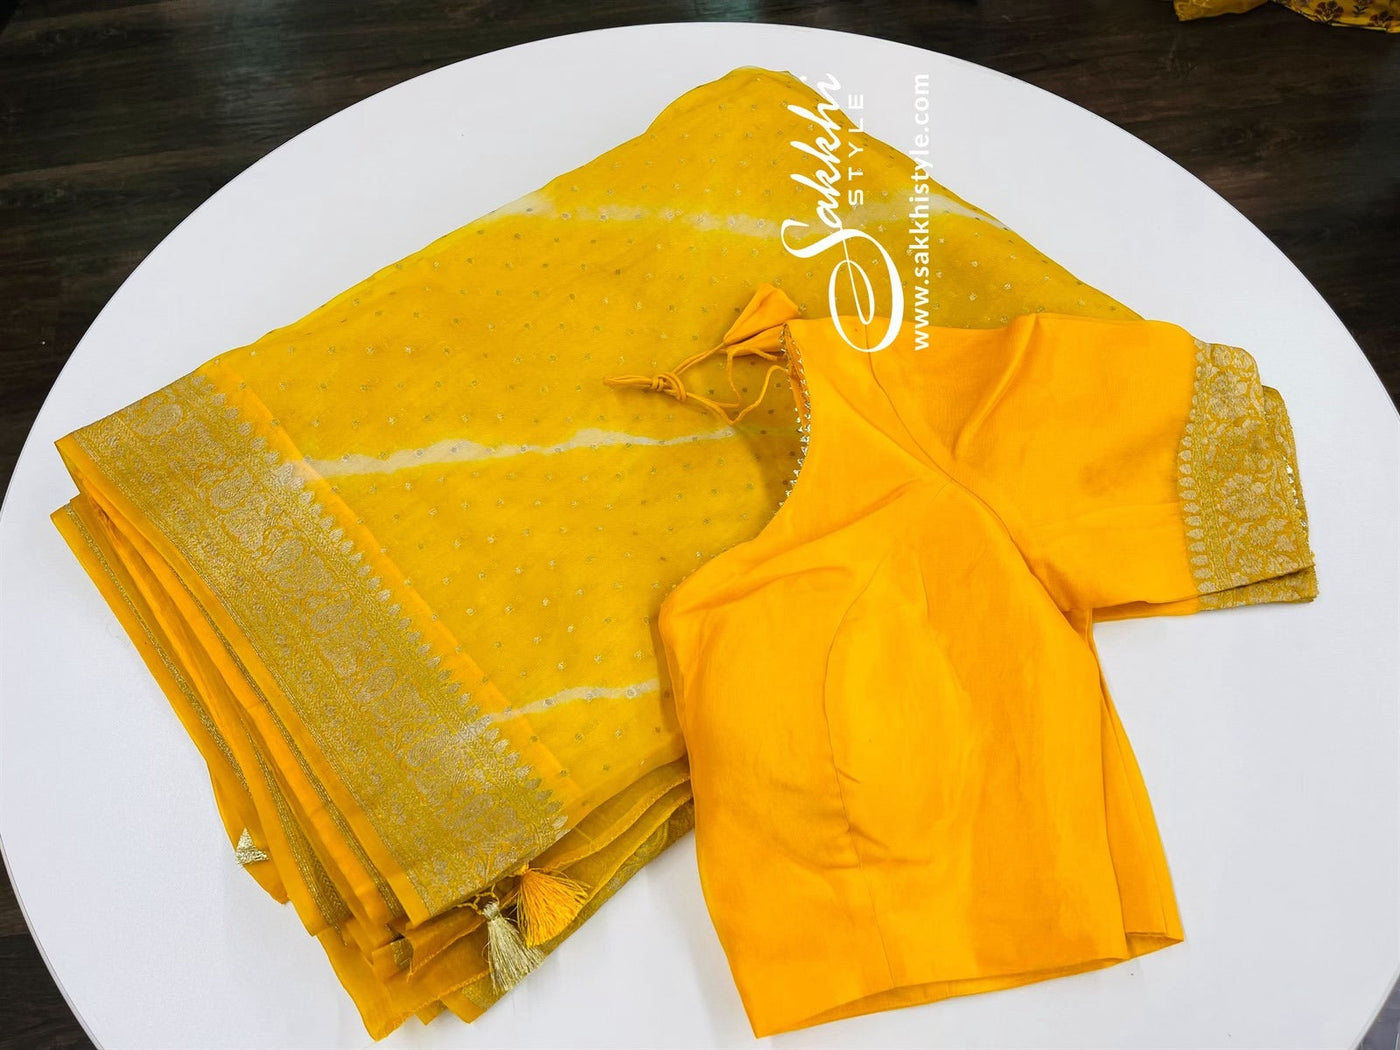 Dark Yellow Tussar Silk Saree - Sakkhi Style